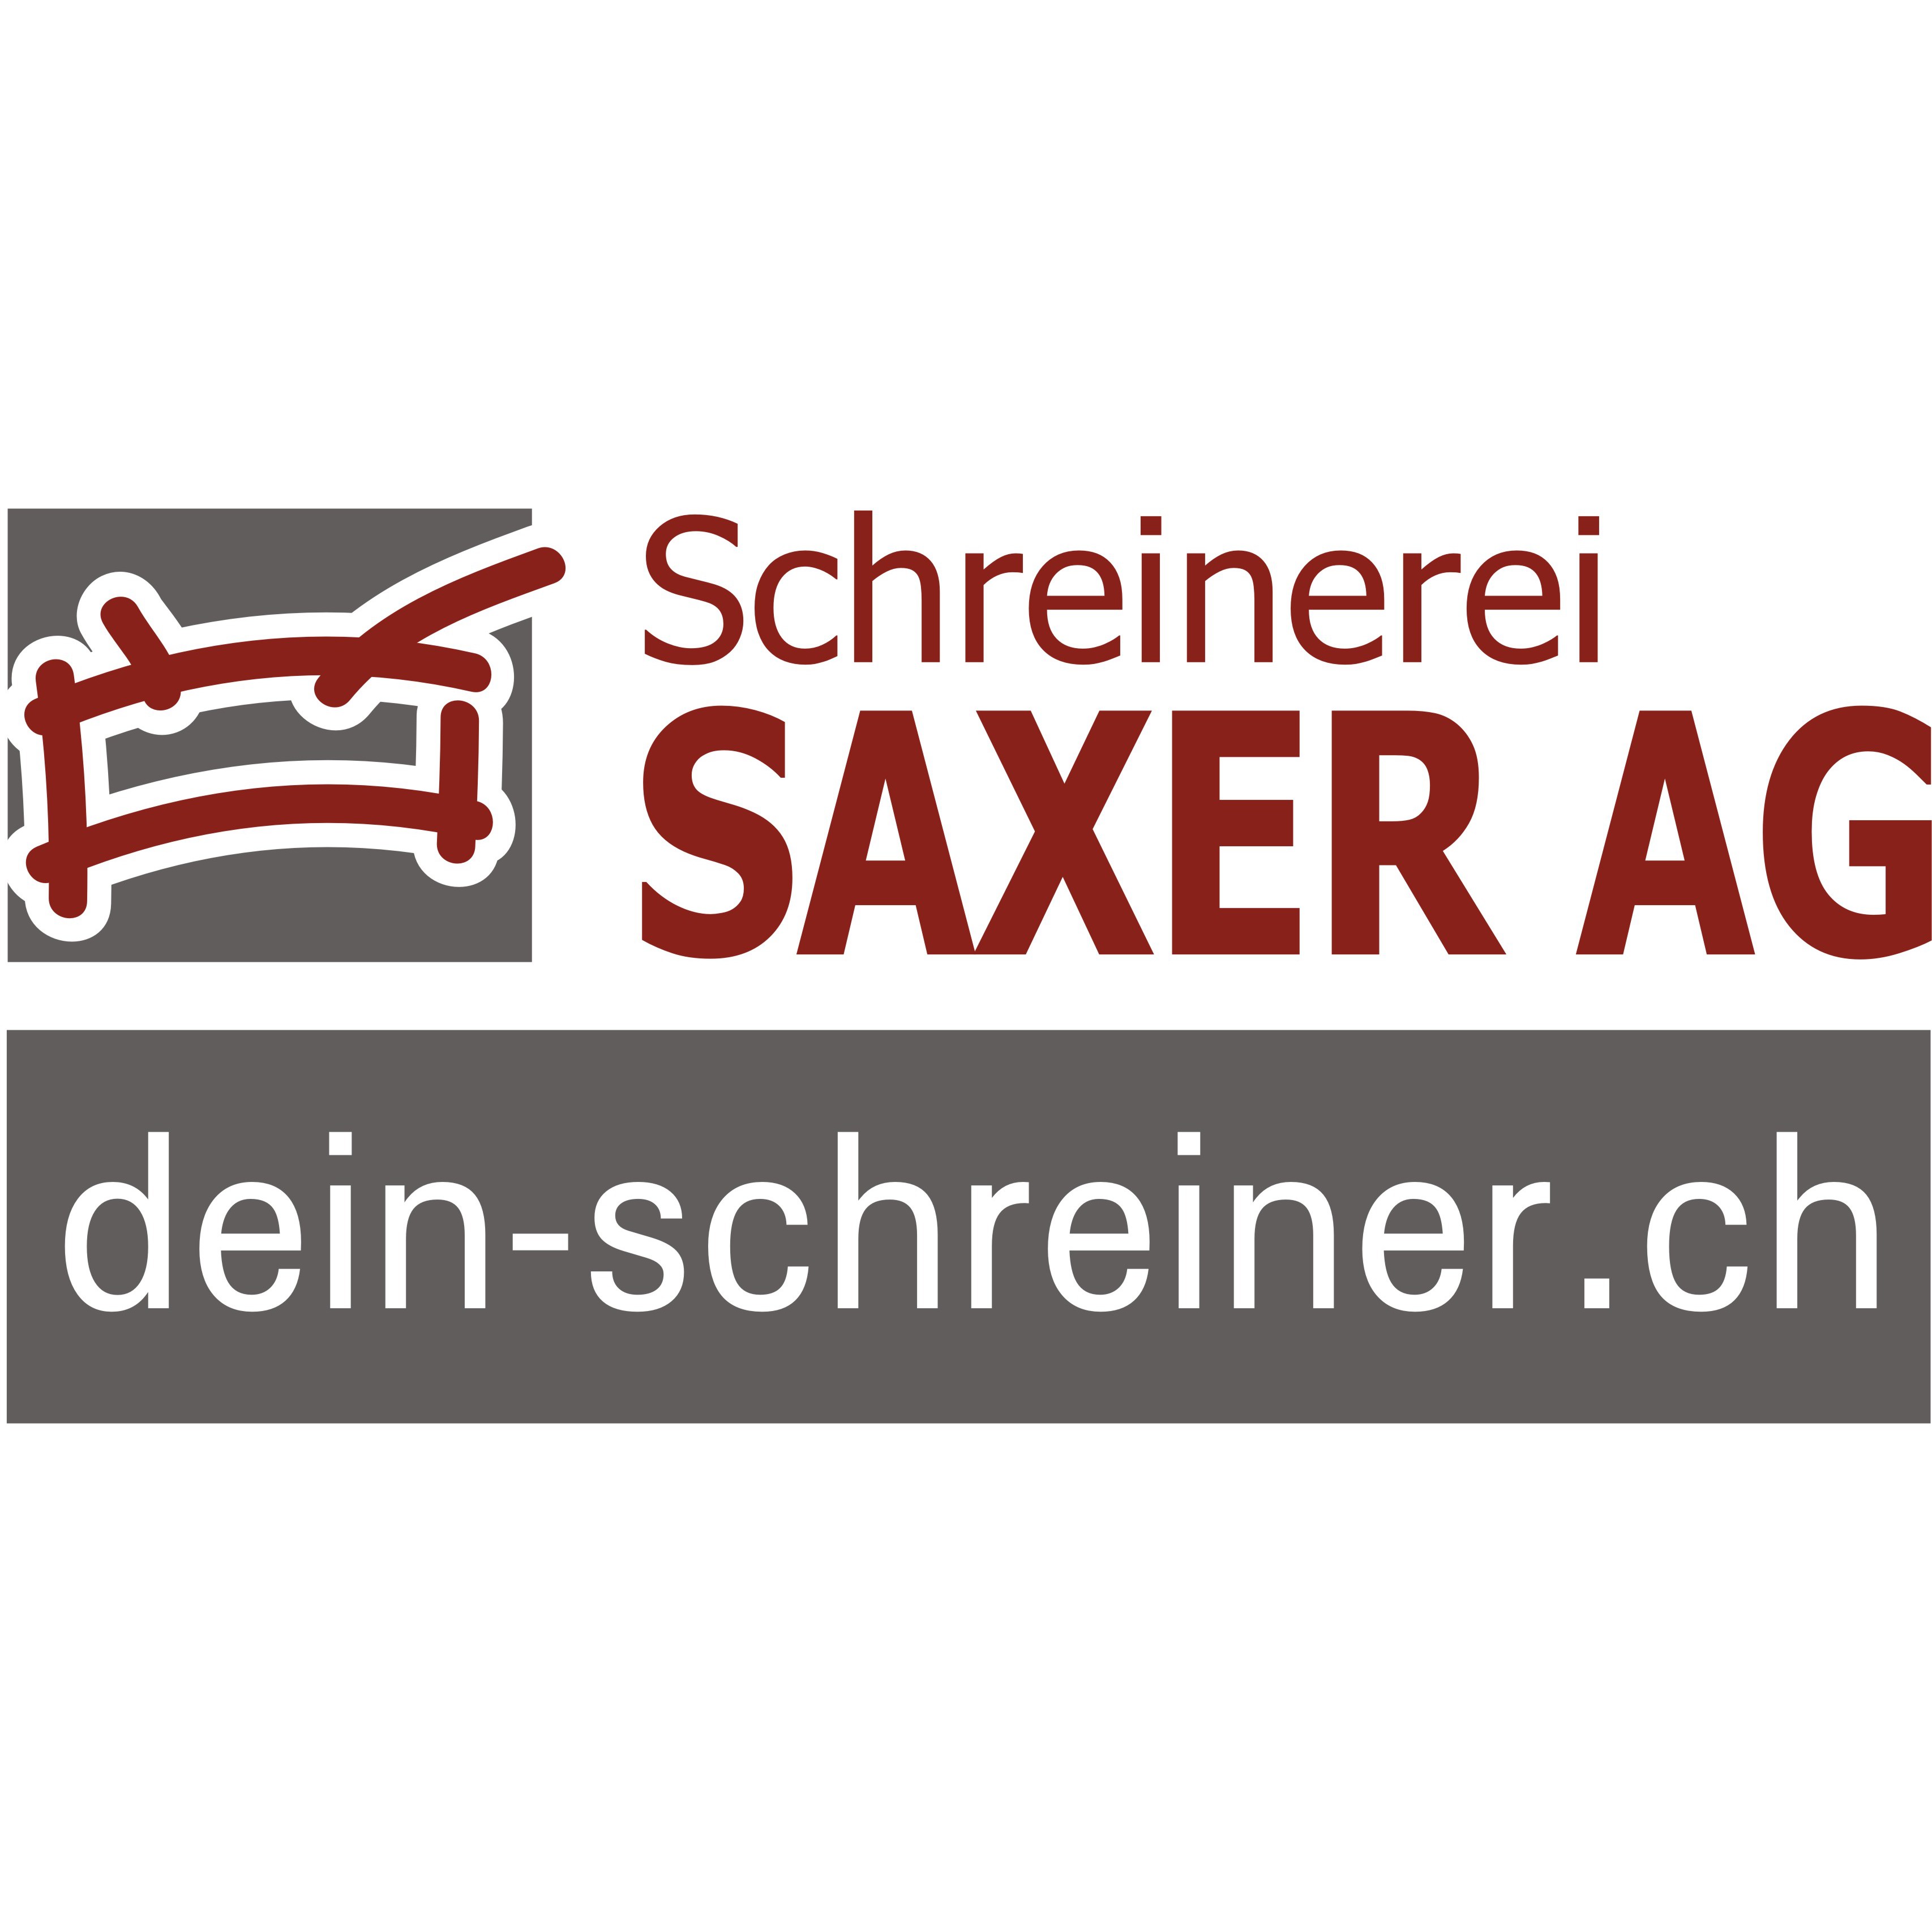 Schreinerei SAXER AG